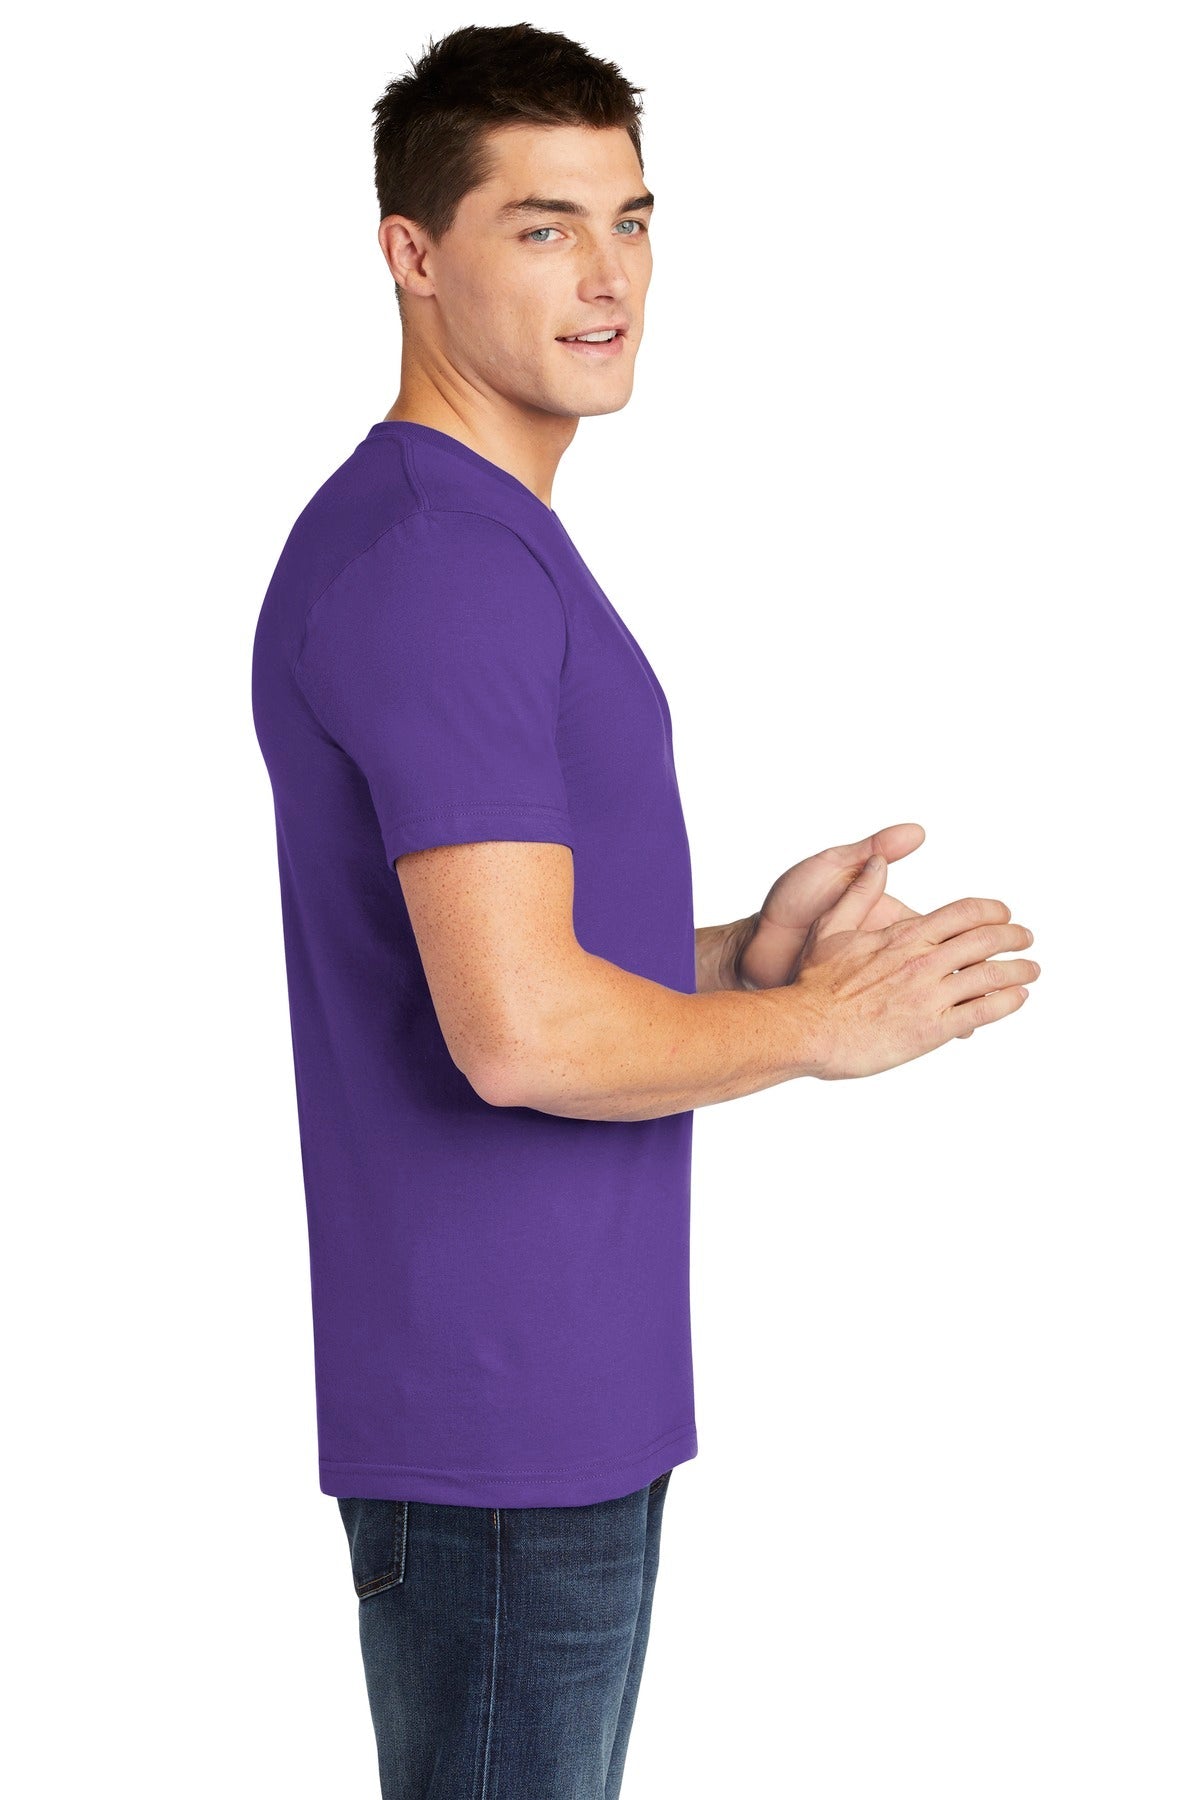 American Apparel ® Fine Jersey T-Shirt. 2001W [Purple] - DFW Impression